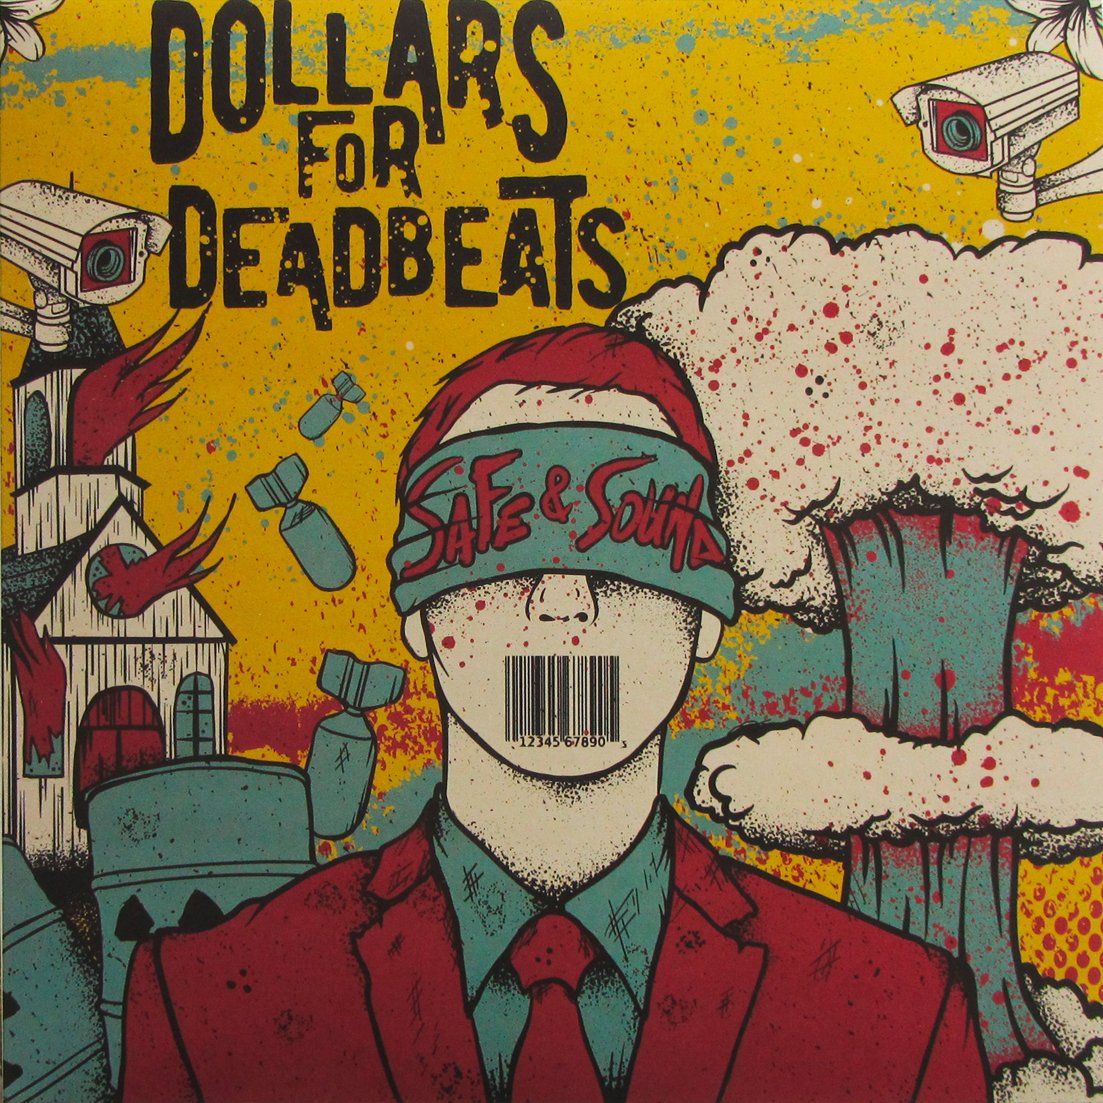 DollarsForDeadbeats